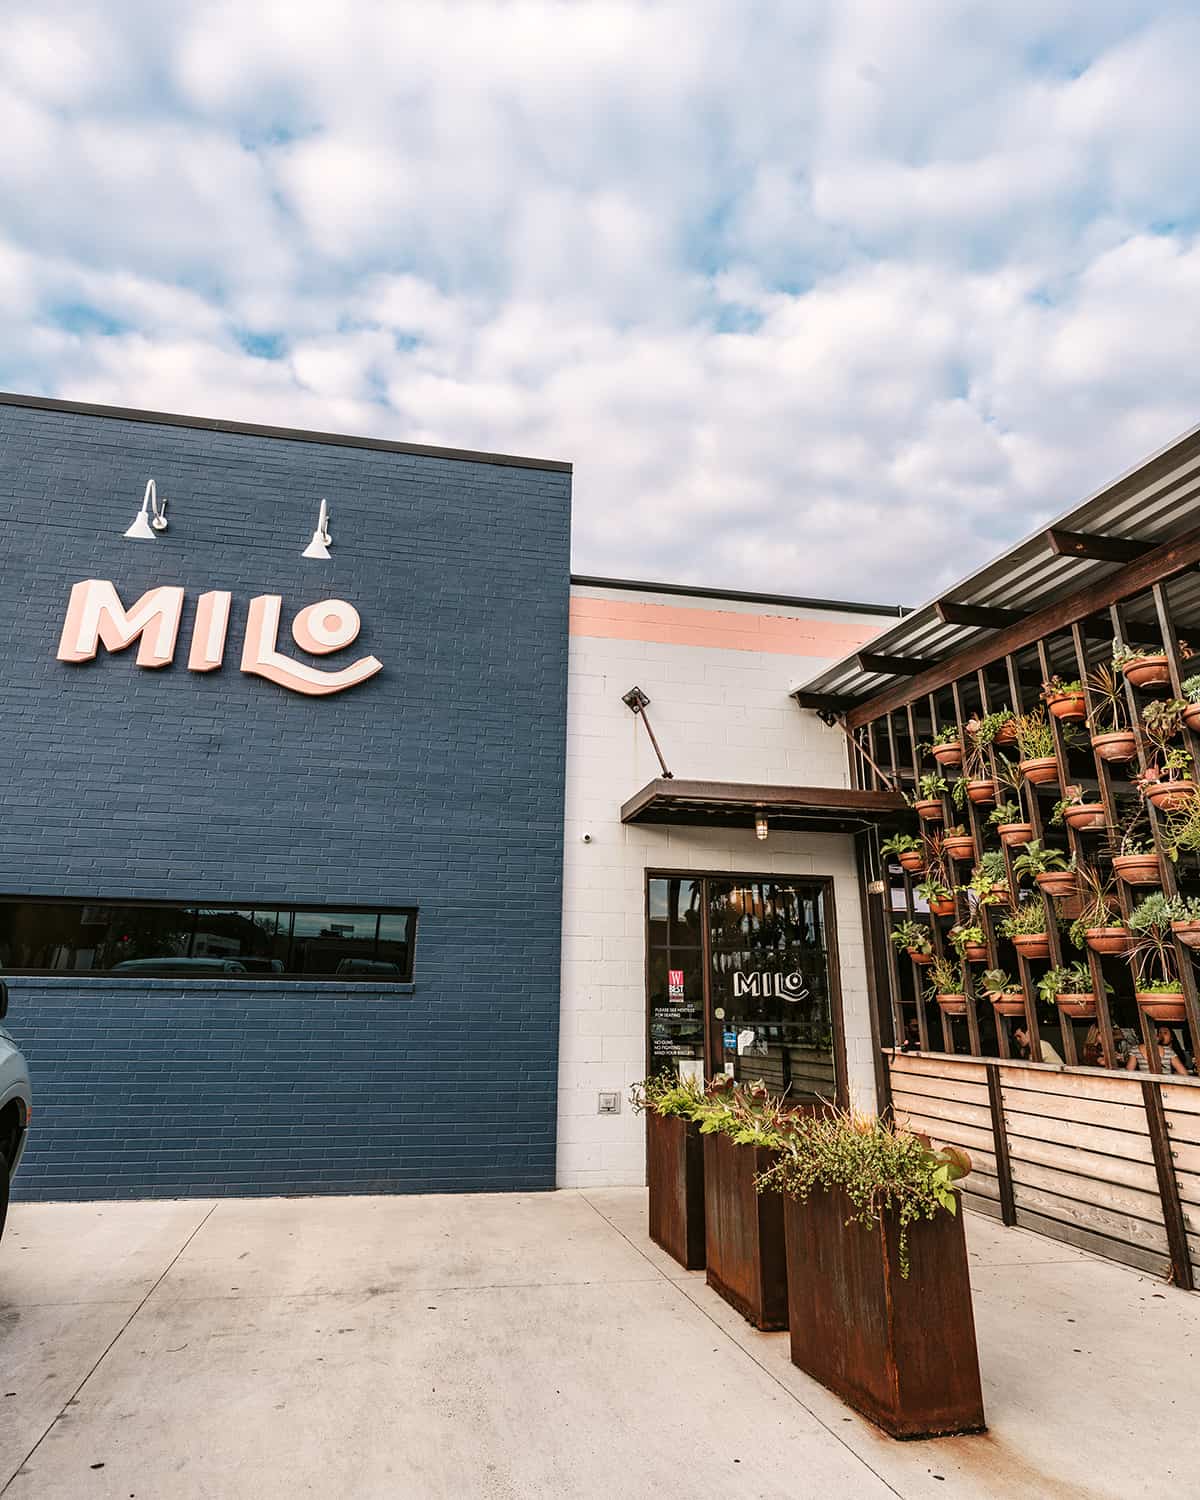 Milo Restaurant in Waco Texas